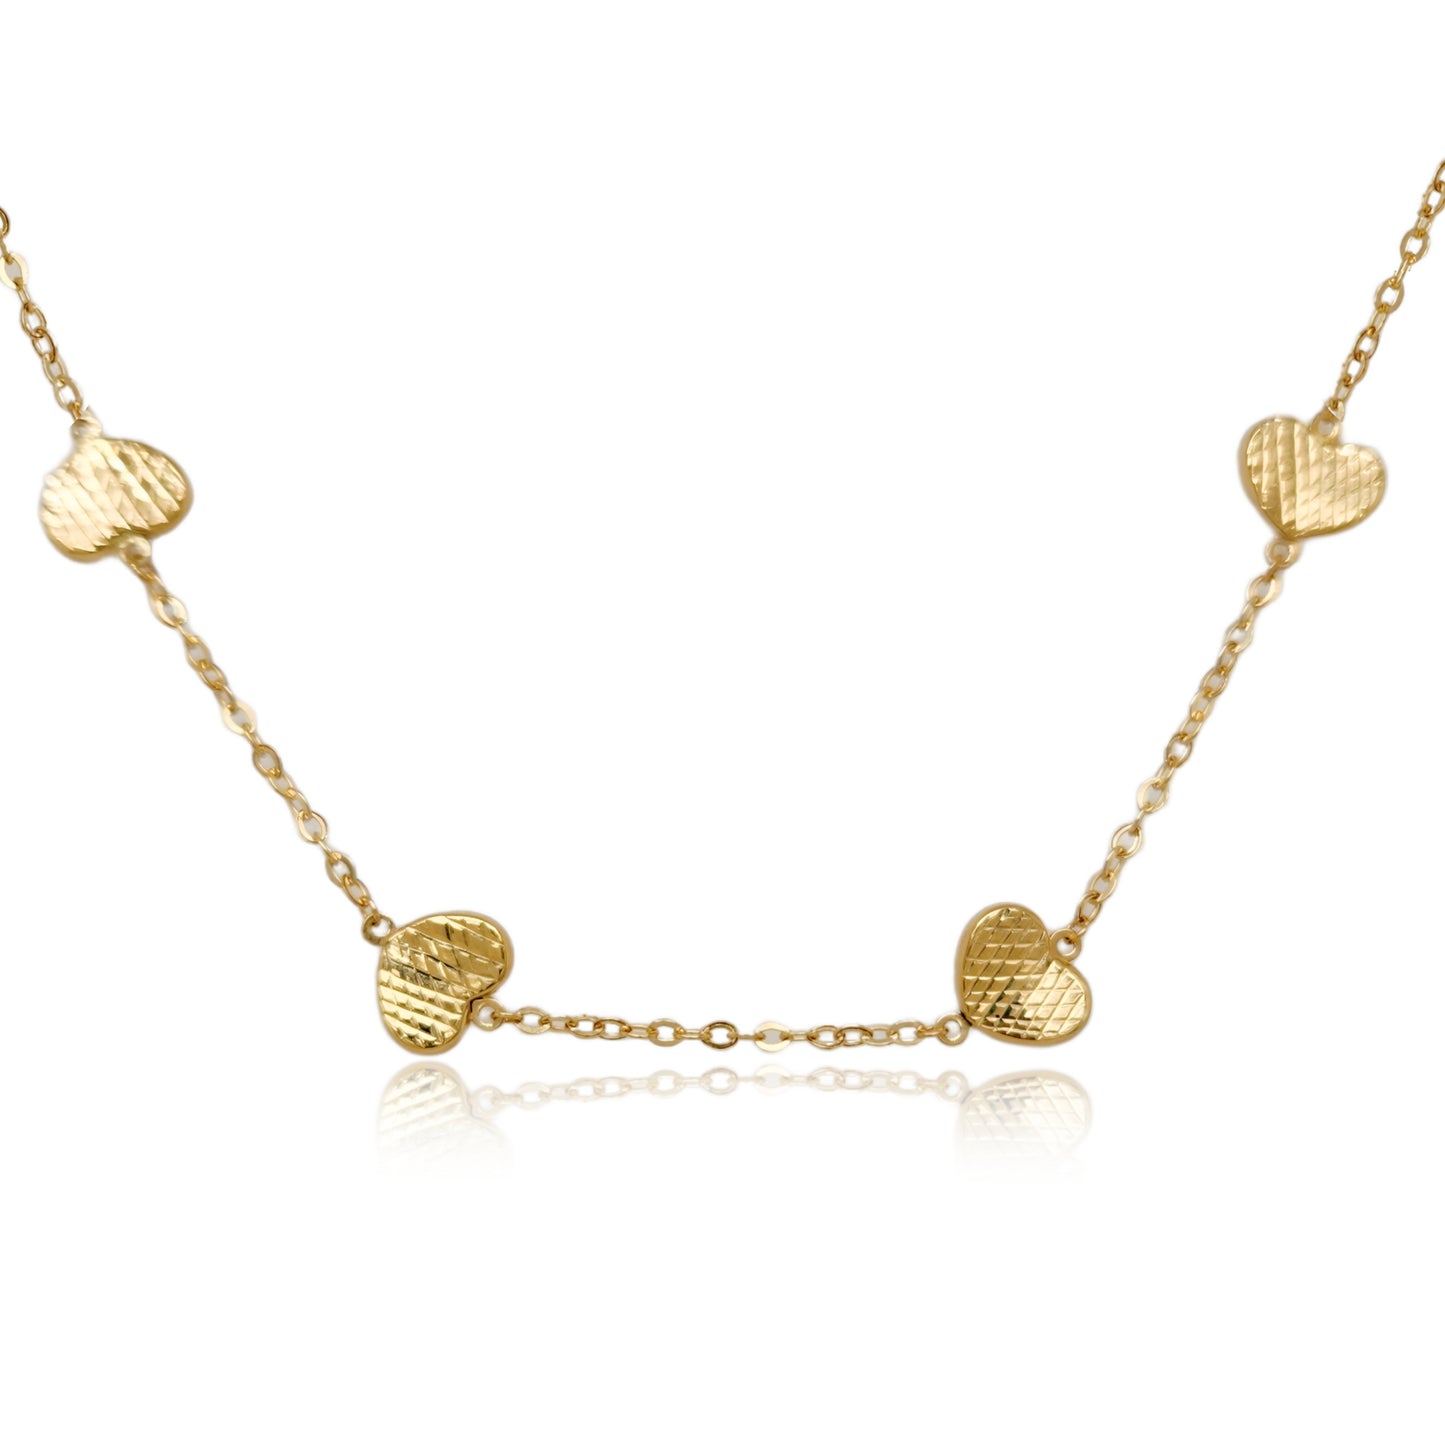 14K Gold Heart Station Necklace